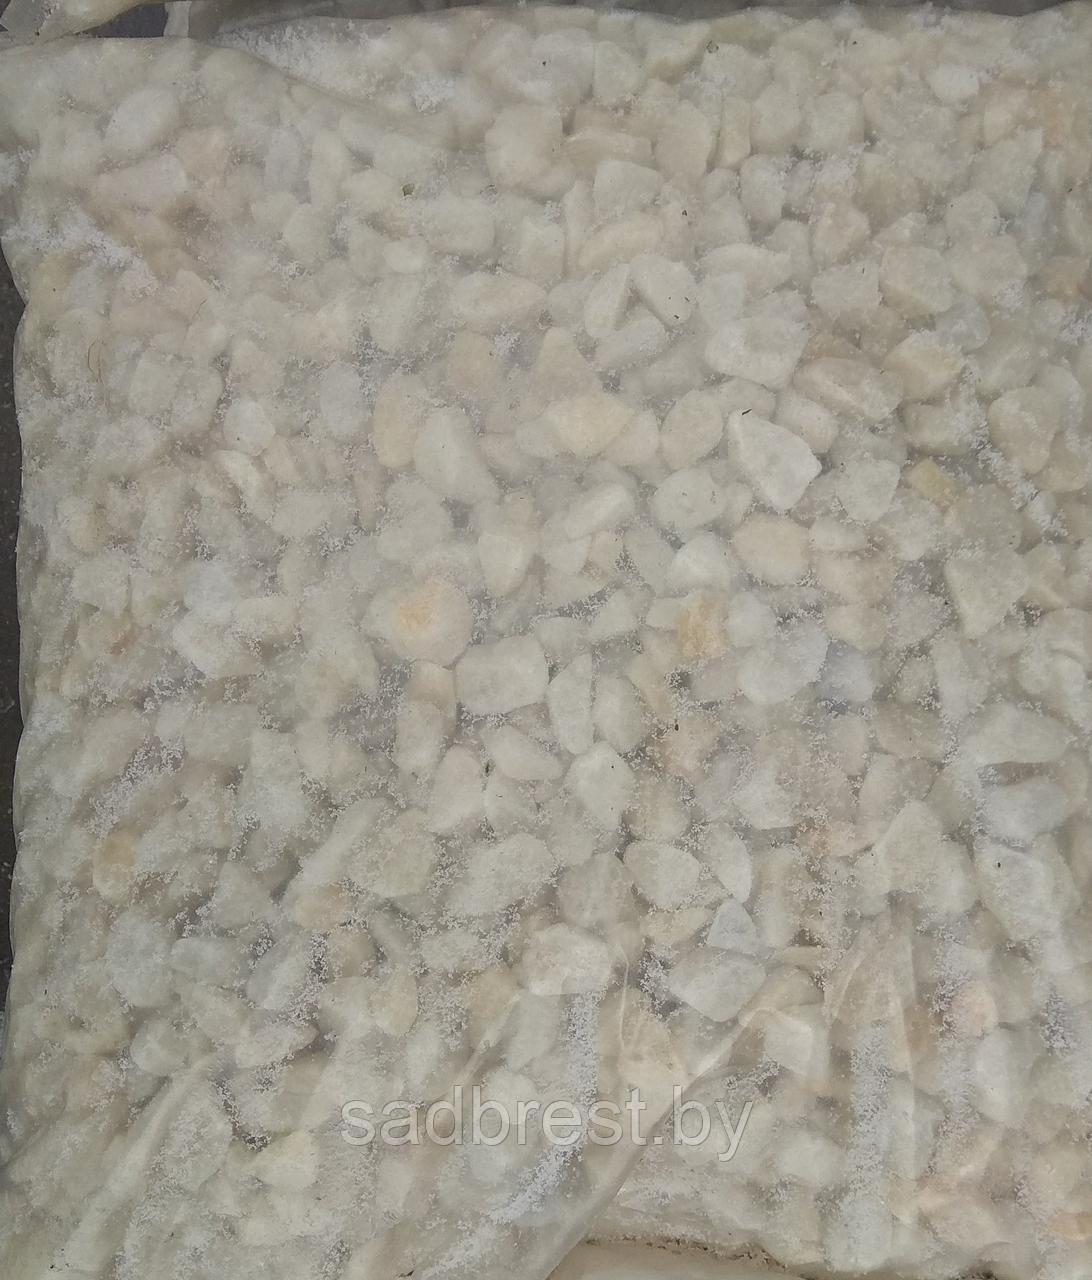 Щебень мраморный белый 5-10 фракции (МКР) 20 кг